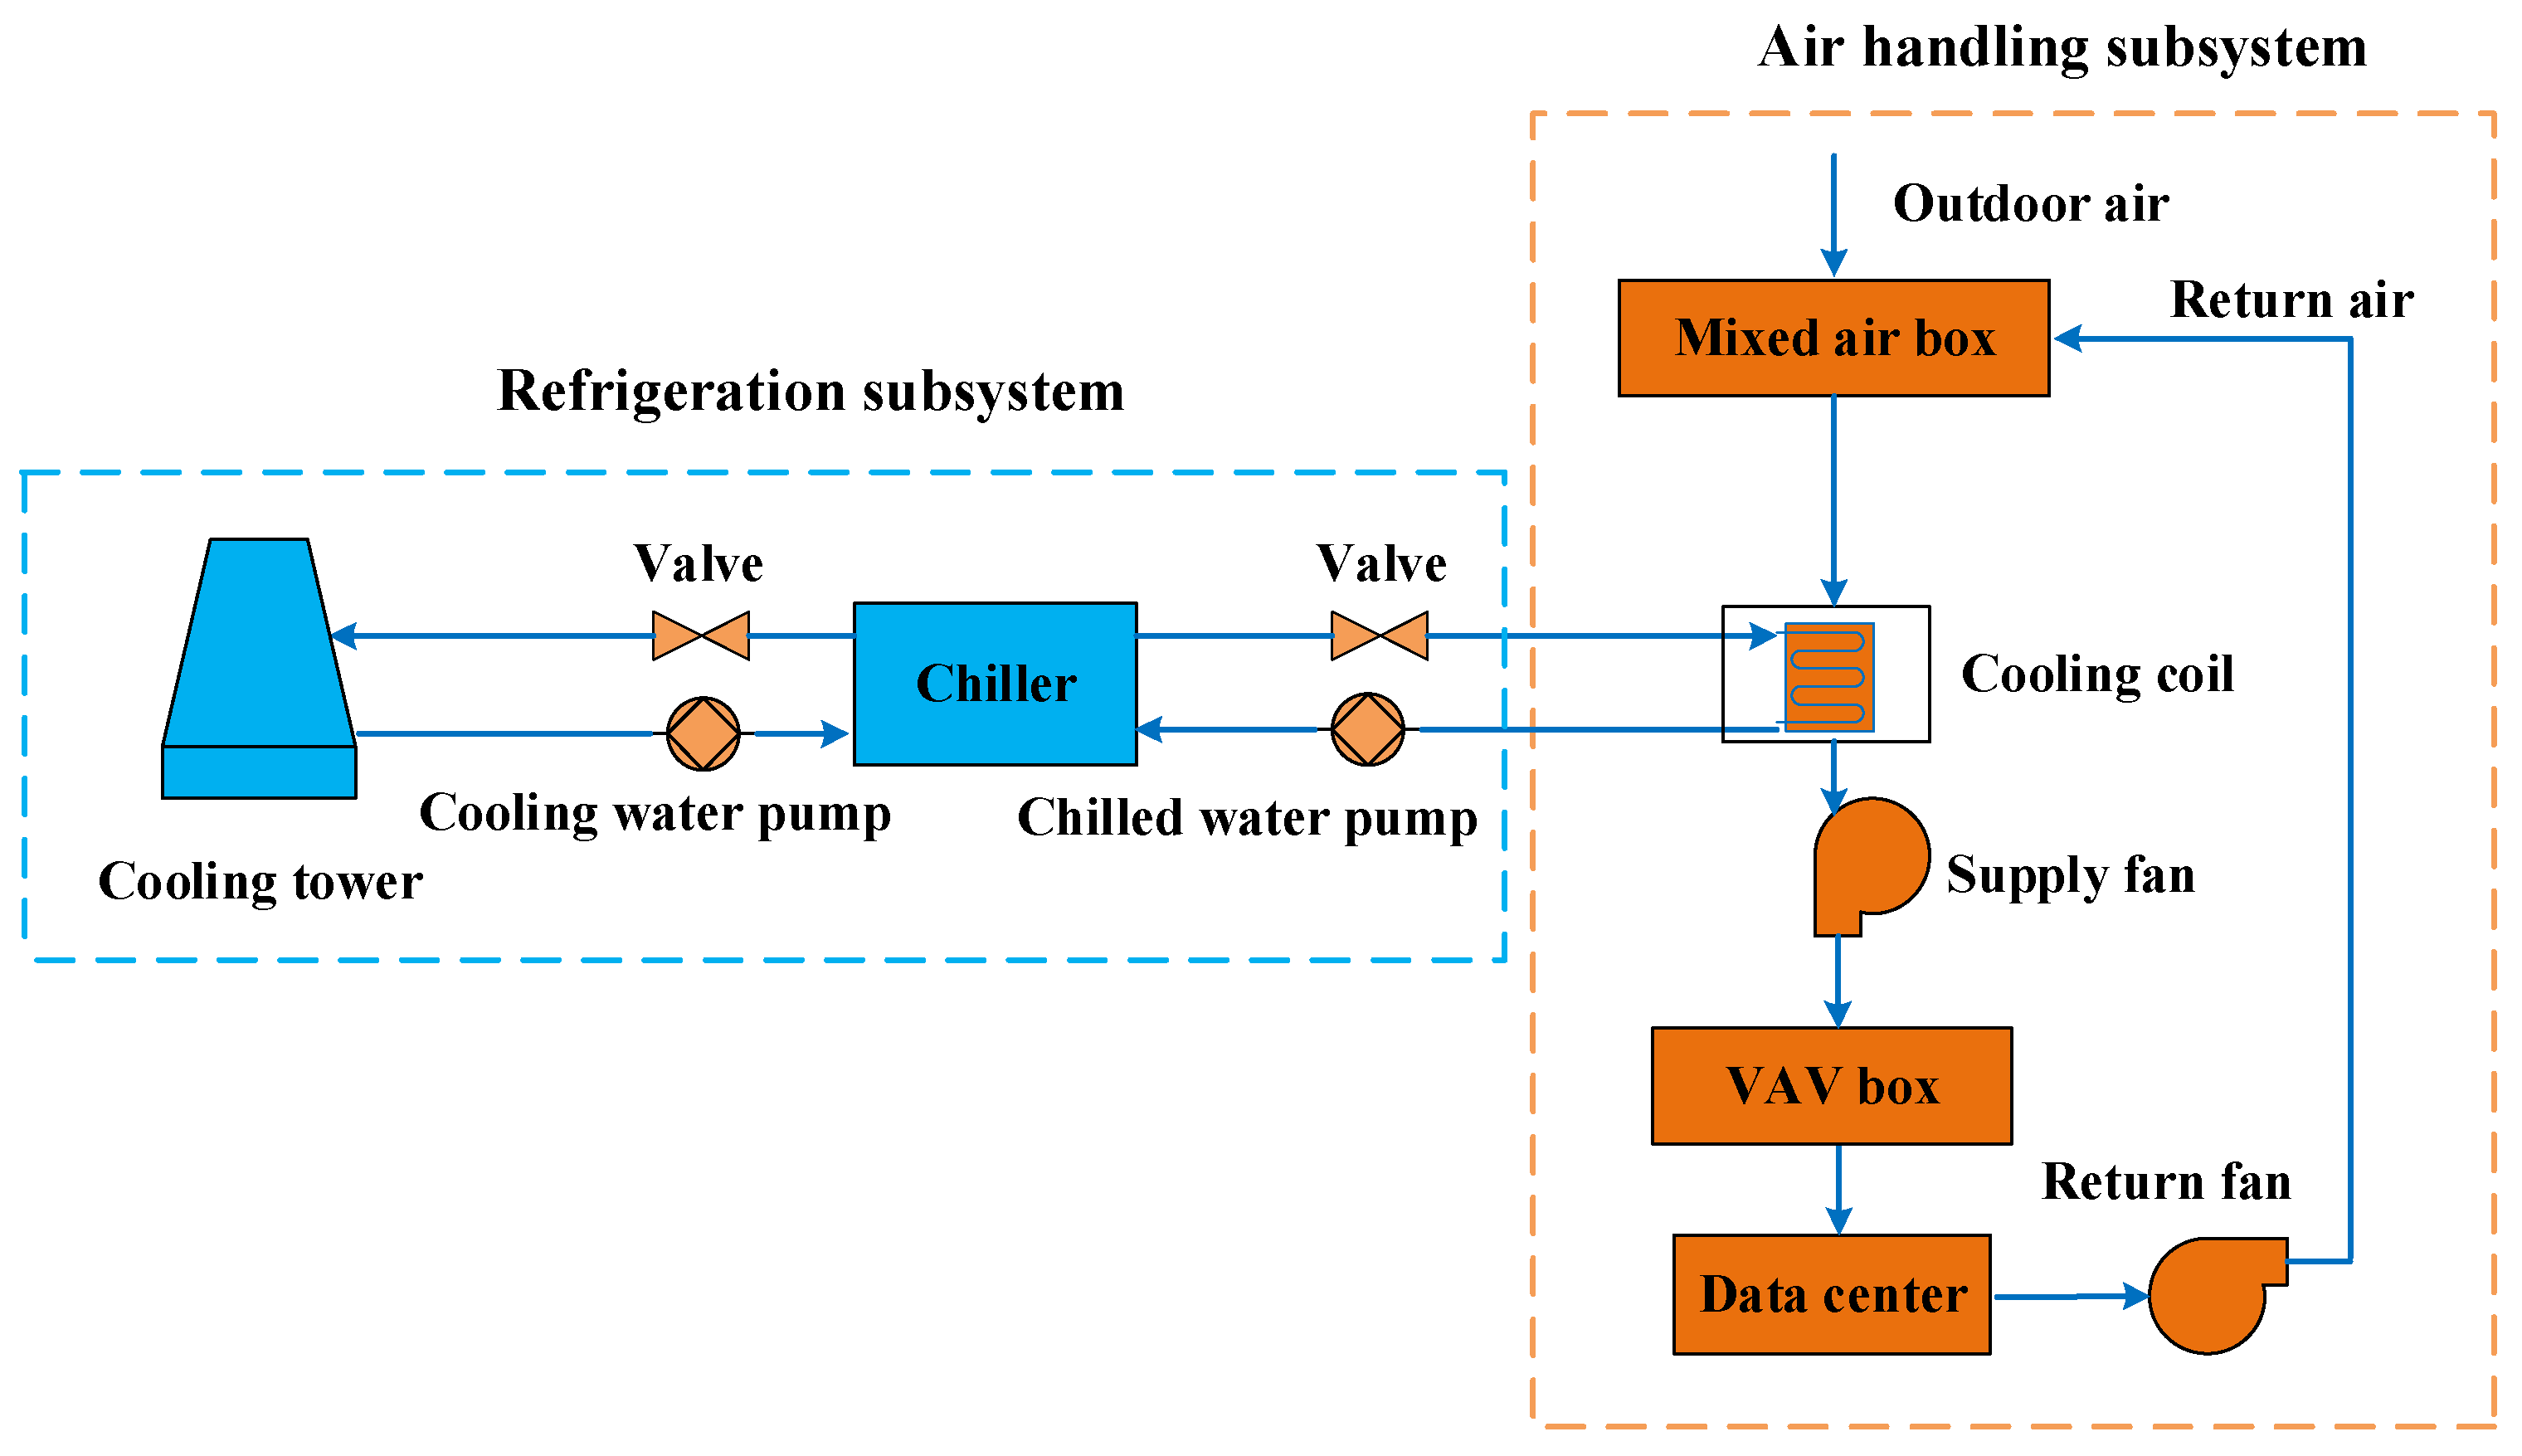 Fault diagnosis of air handling unit via combining probabilistic